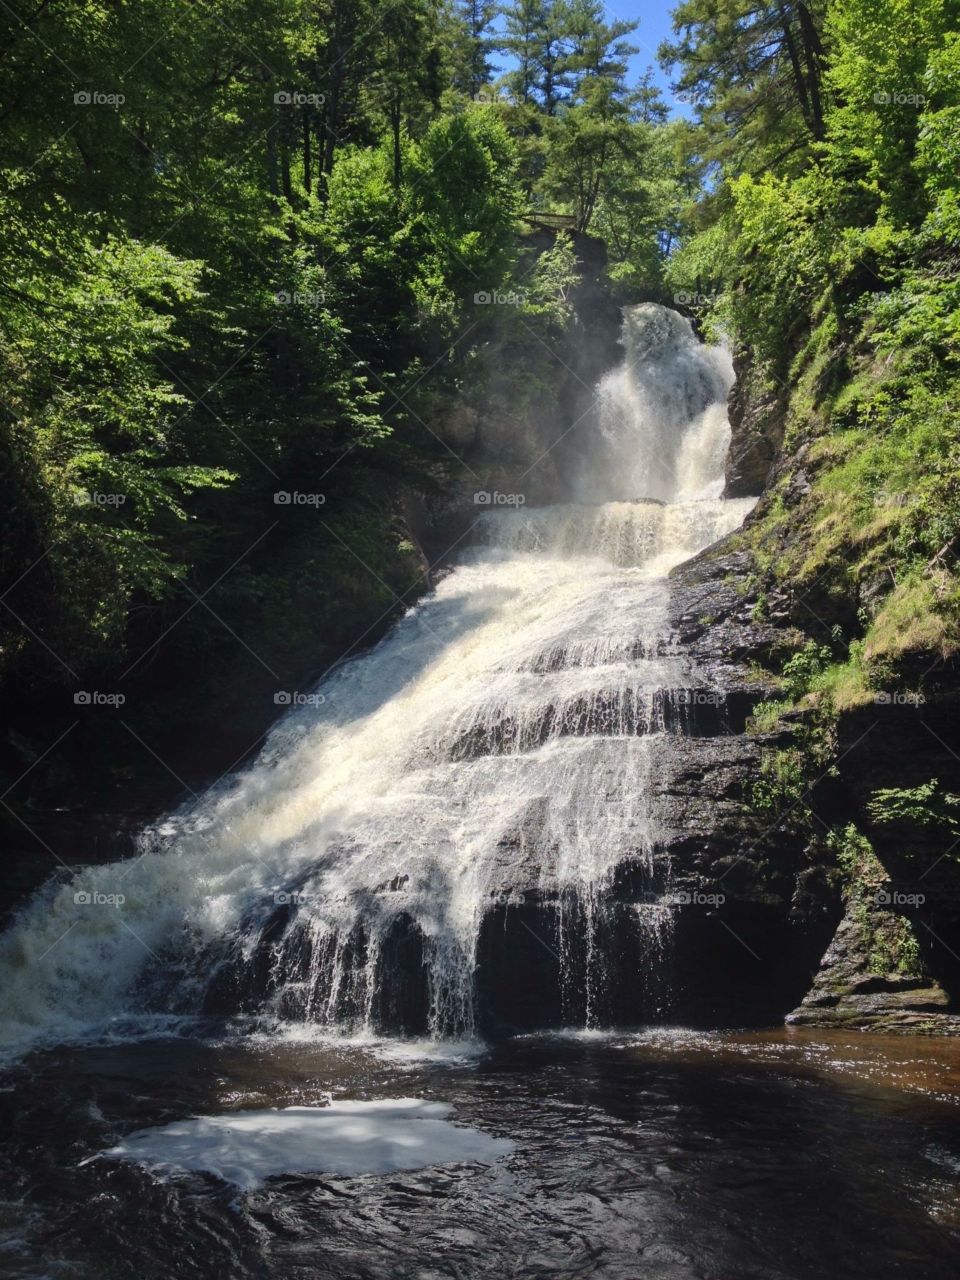 Waterfall. This was taken at the Dingman Falls in Pennsylvania